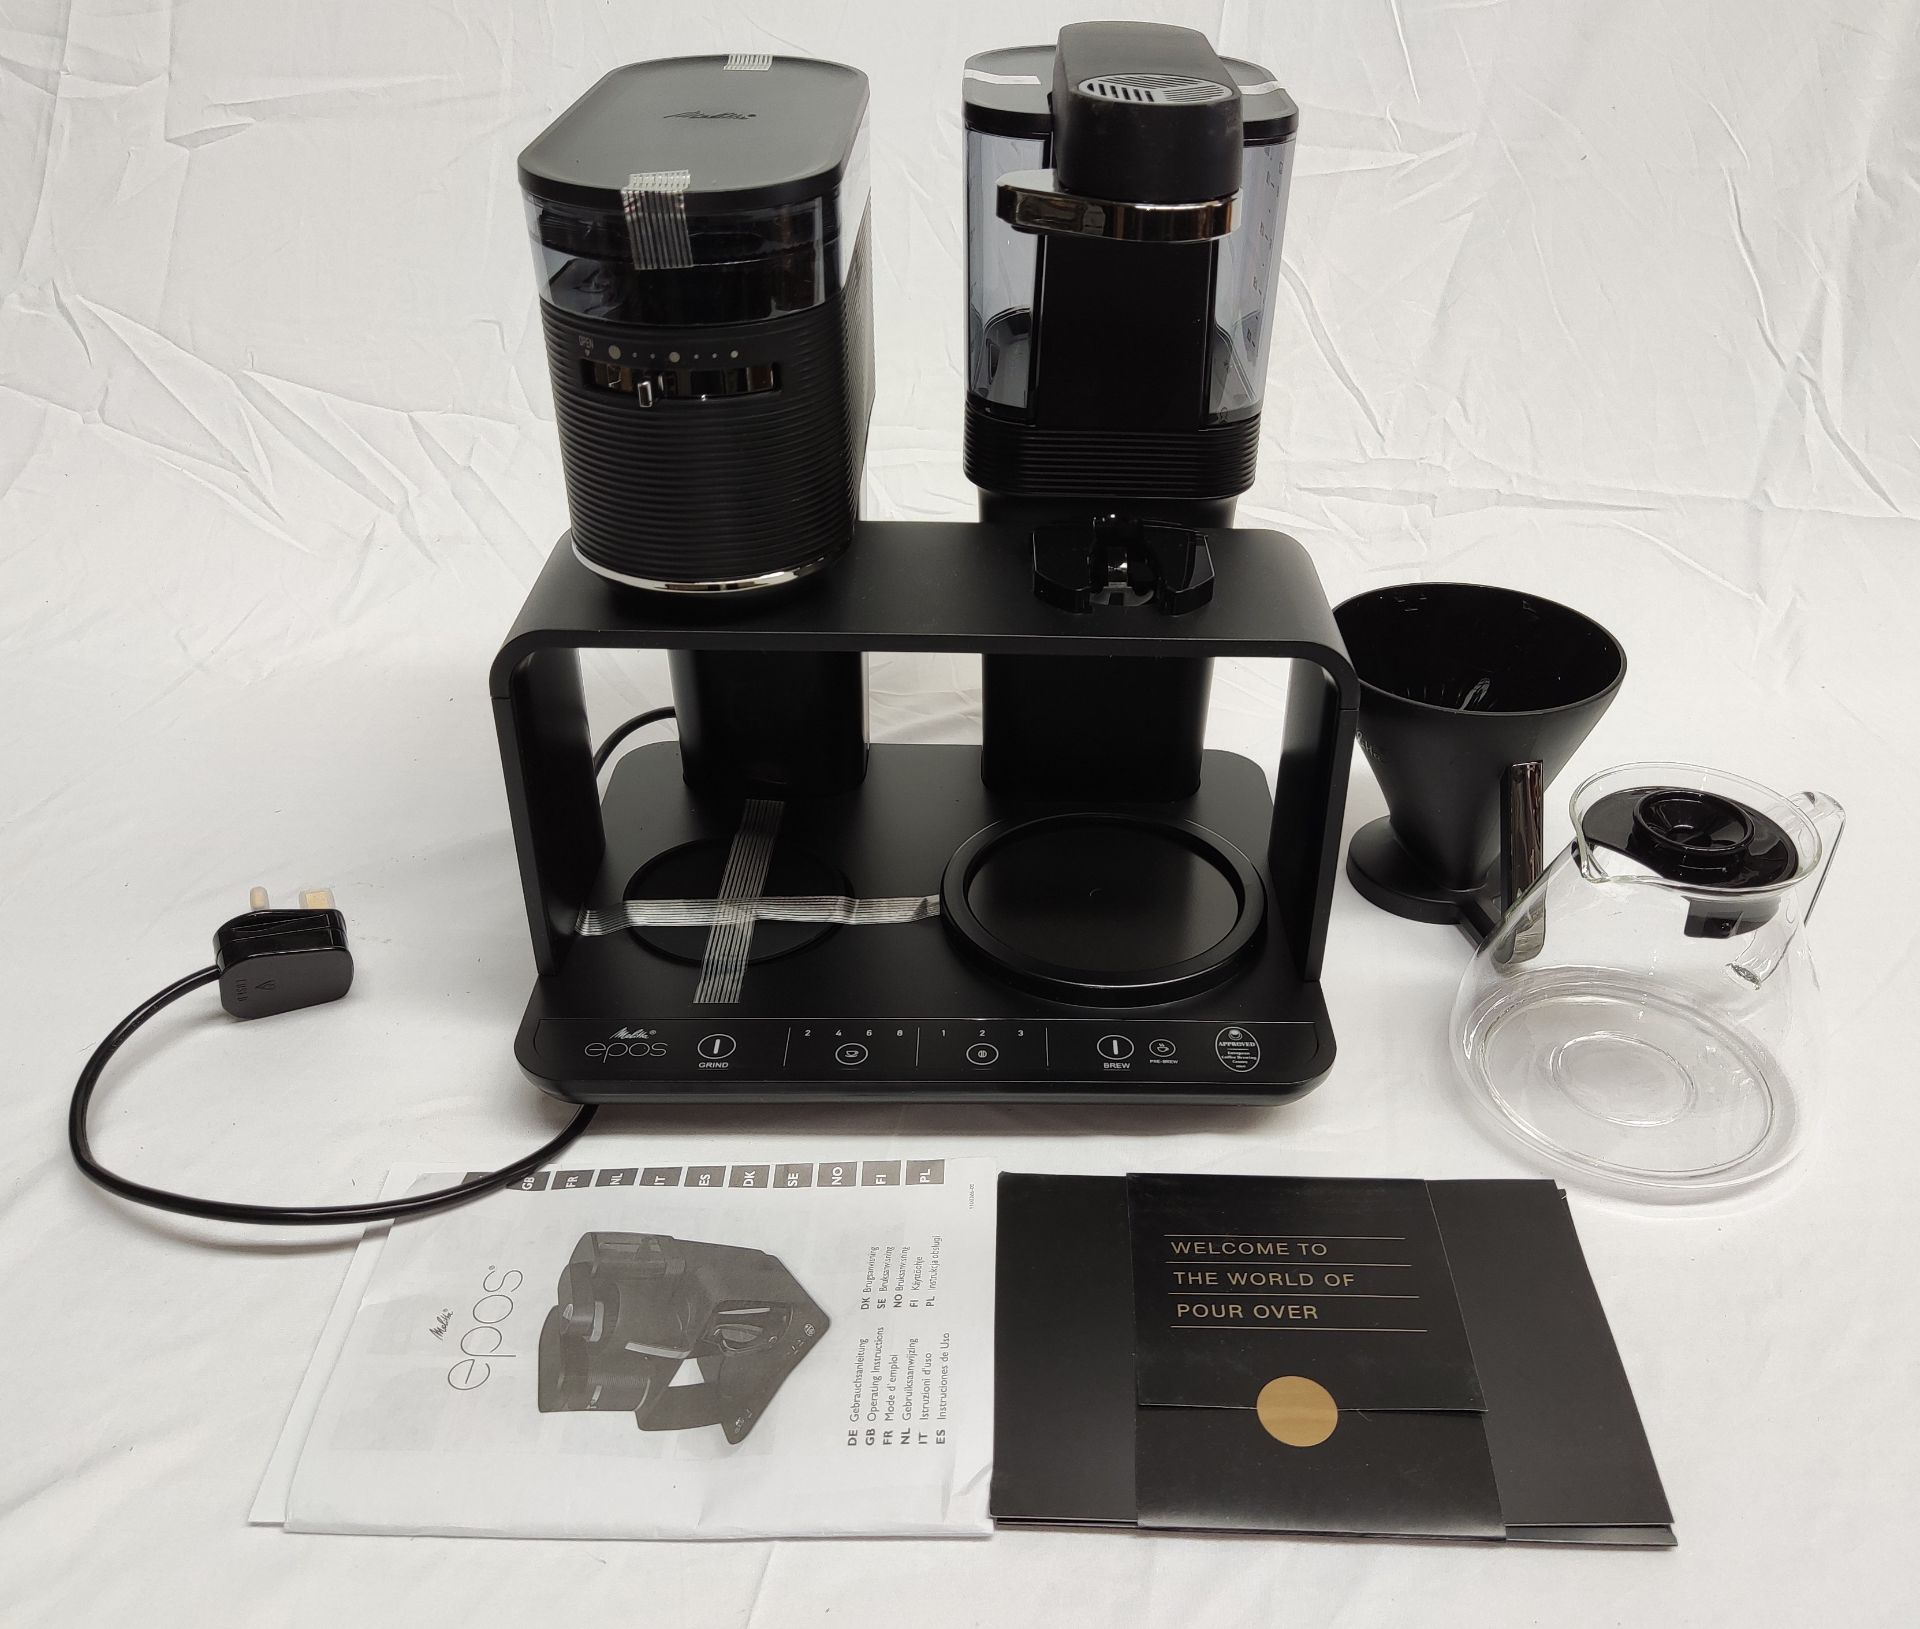 1 x MELITTA Epos Coffee Machine With Grinder - Boxed - Original RRP £399 - Ref: 7129012/HJL350/C19/ - Image 12 of 14